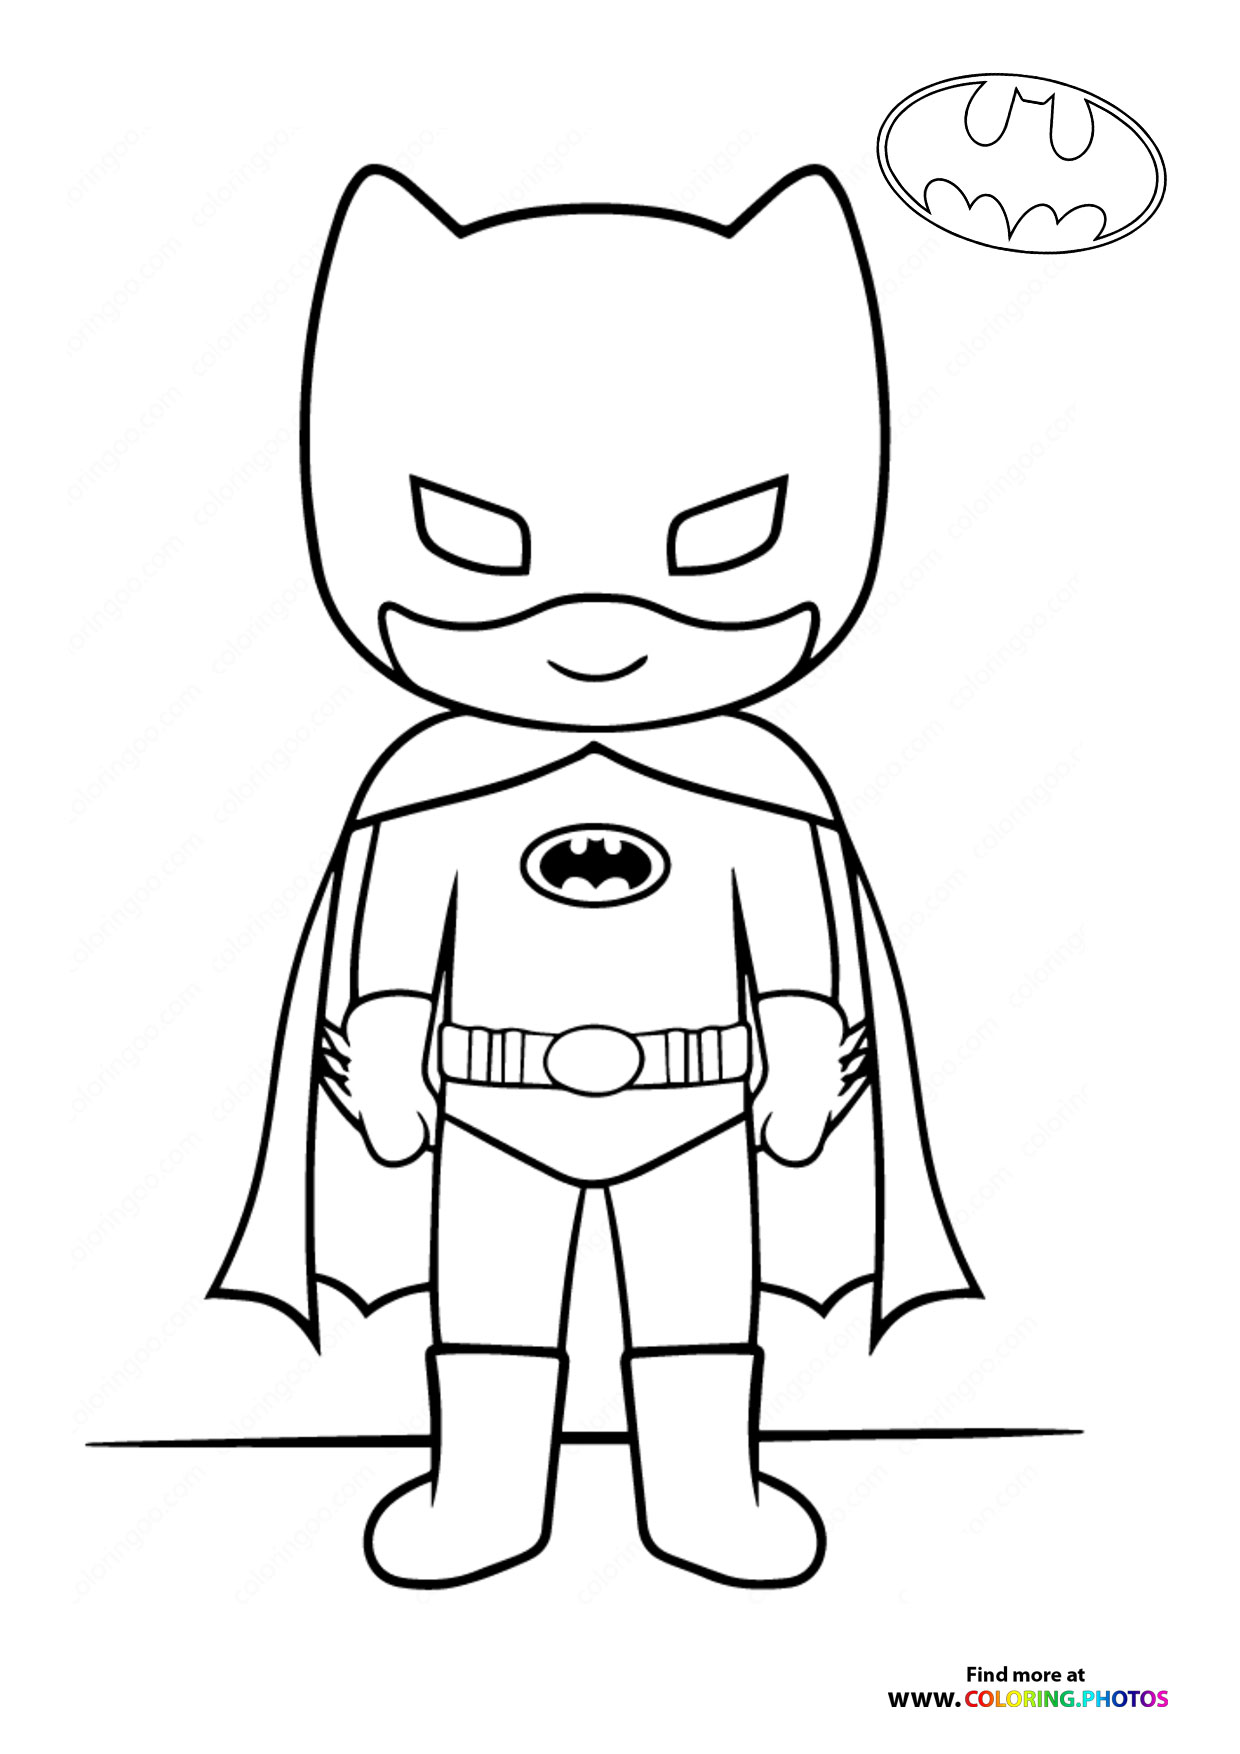 Cute little batman